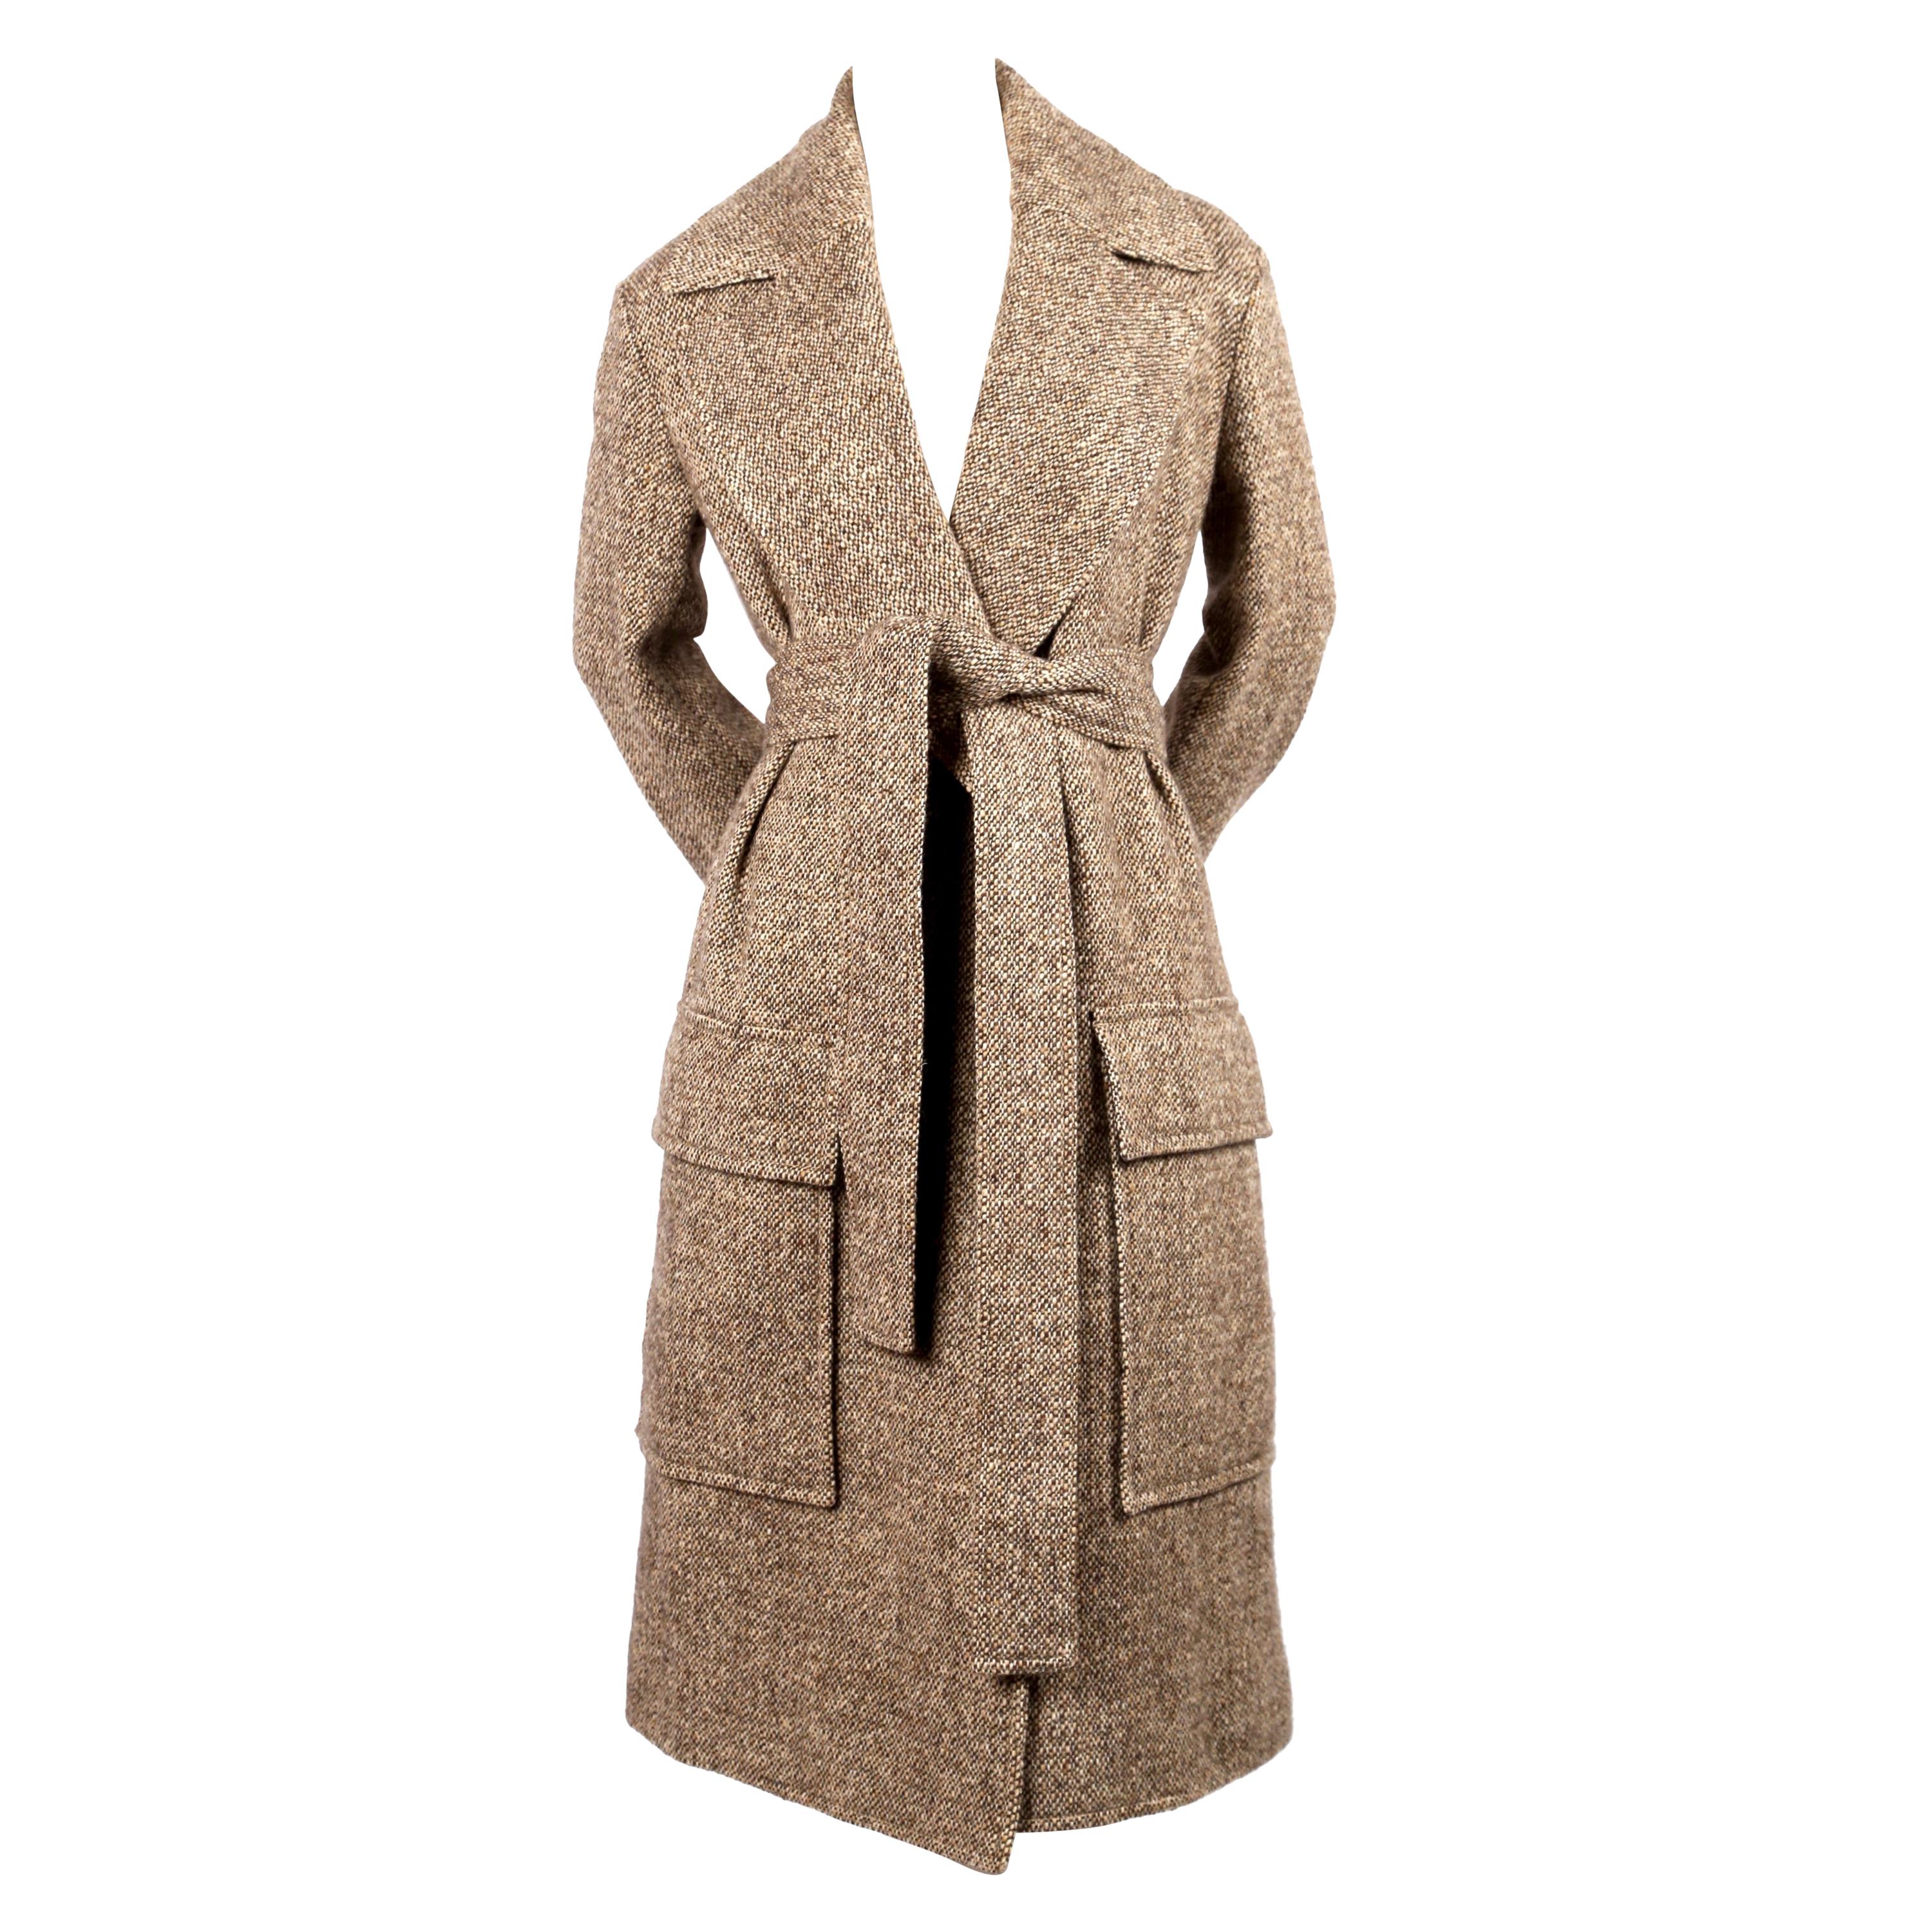 CELINE by PHOEBE PHILO tweed wool coat with waist tie - new